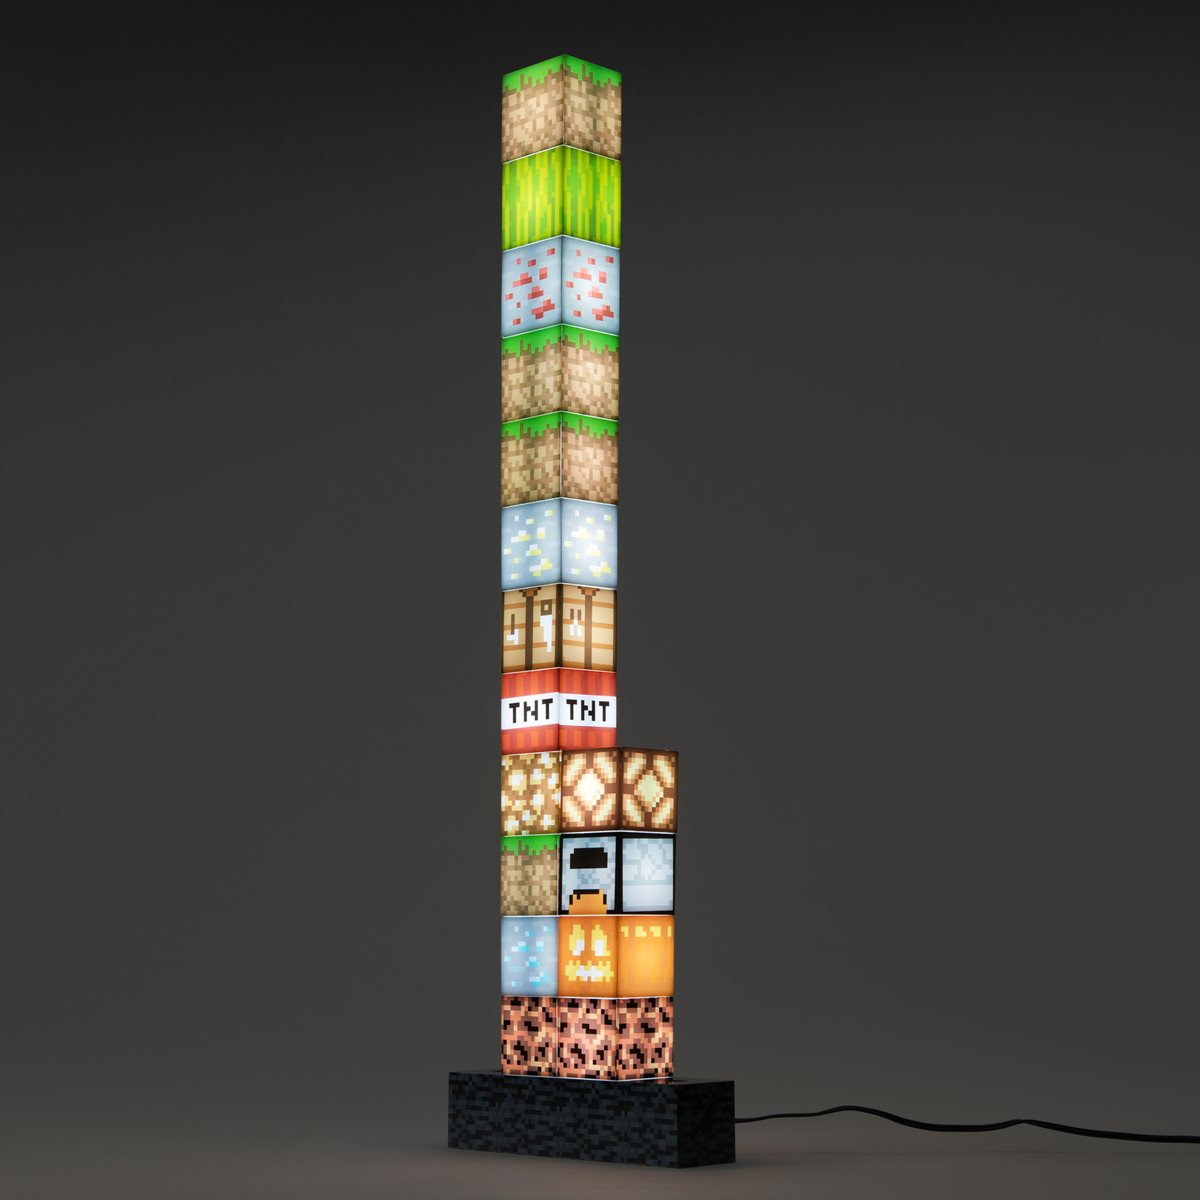 Minecraft Block Building Light: A modular Minecraft-themed mood light.